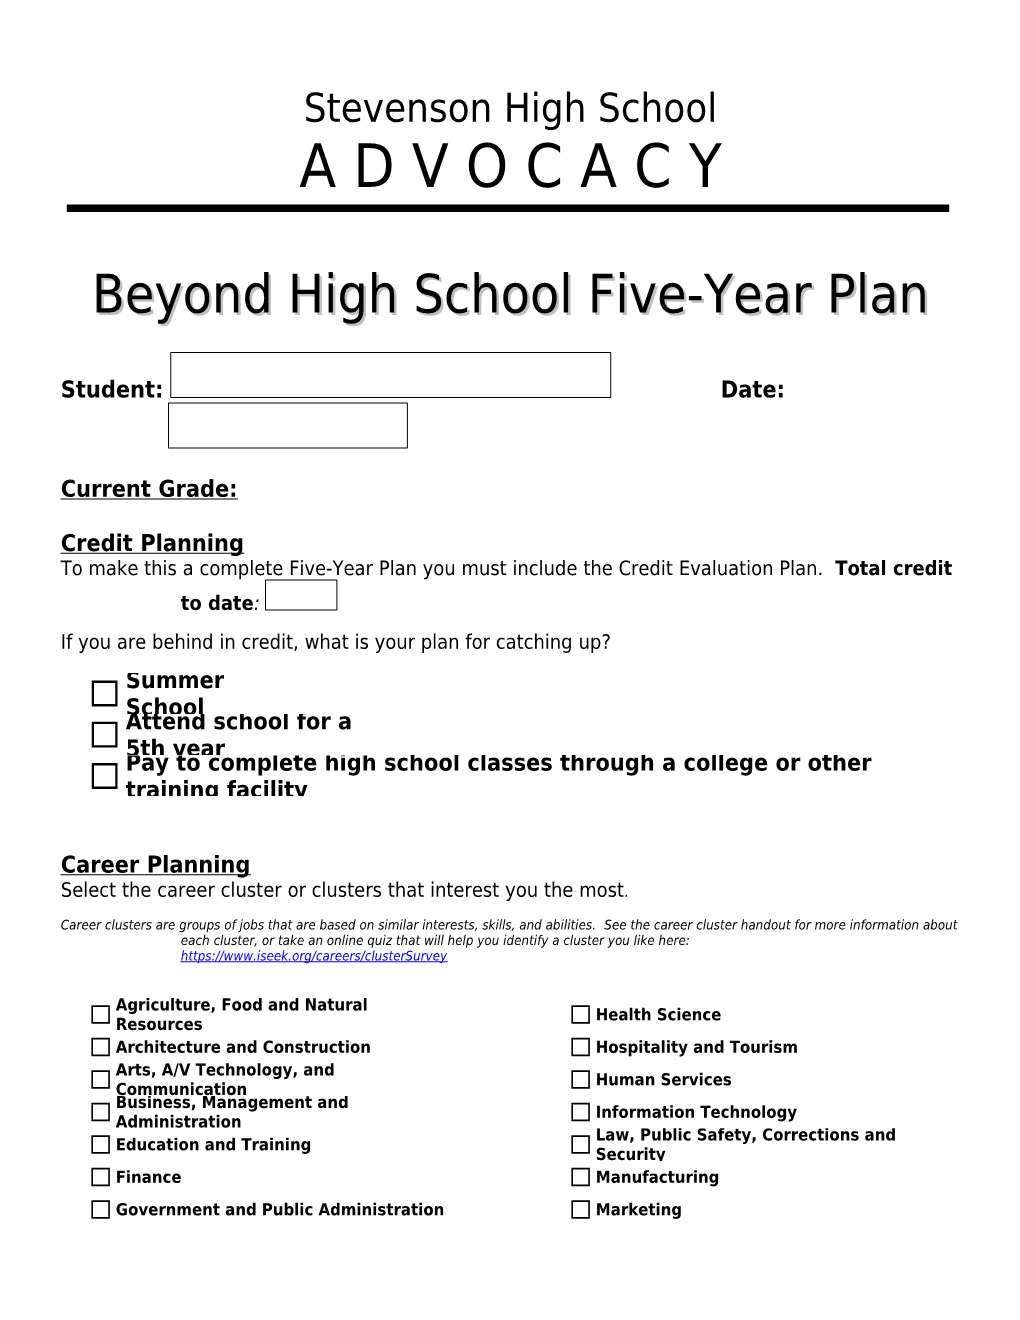 Beyond High School Five-Year Plan